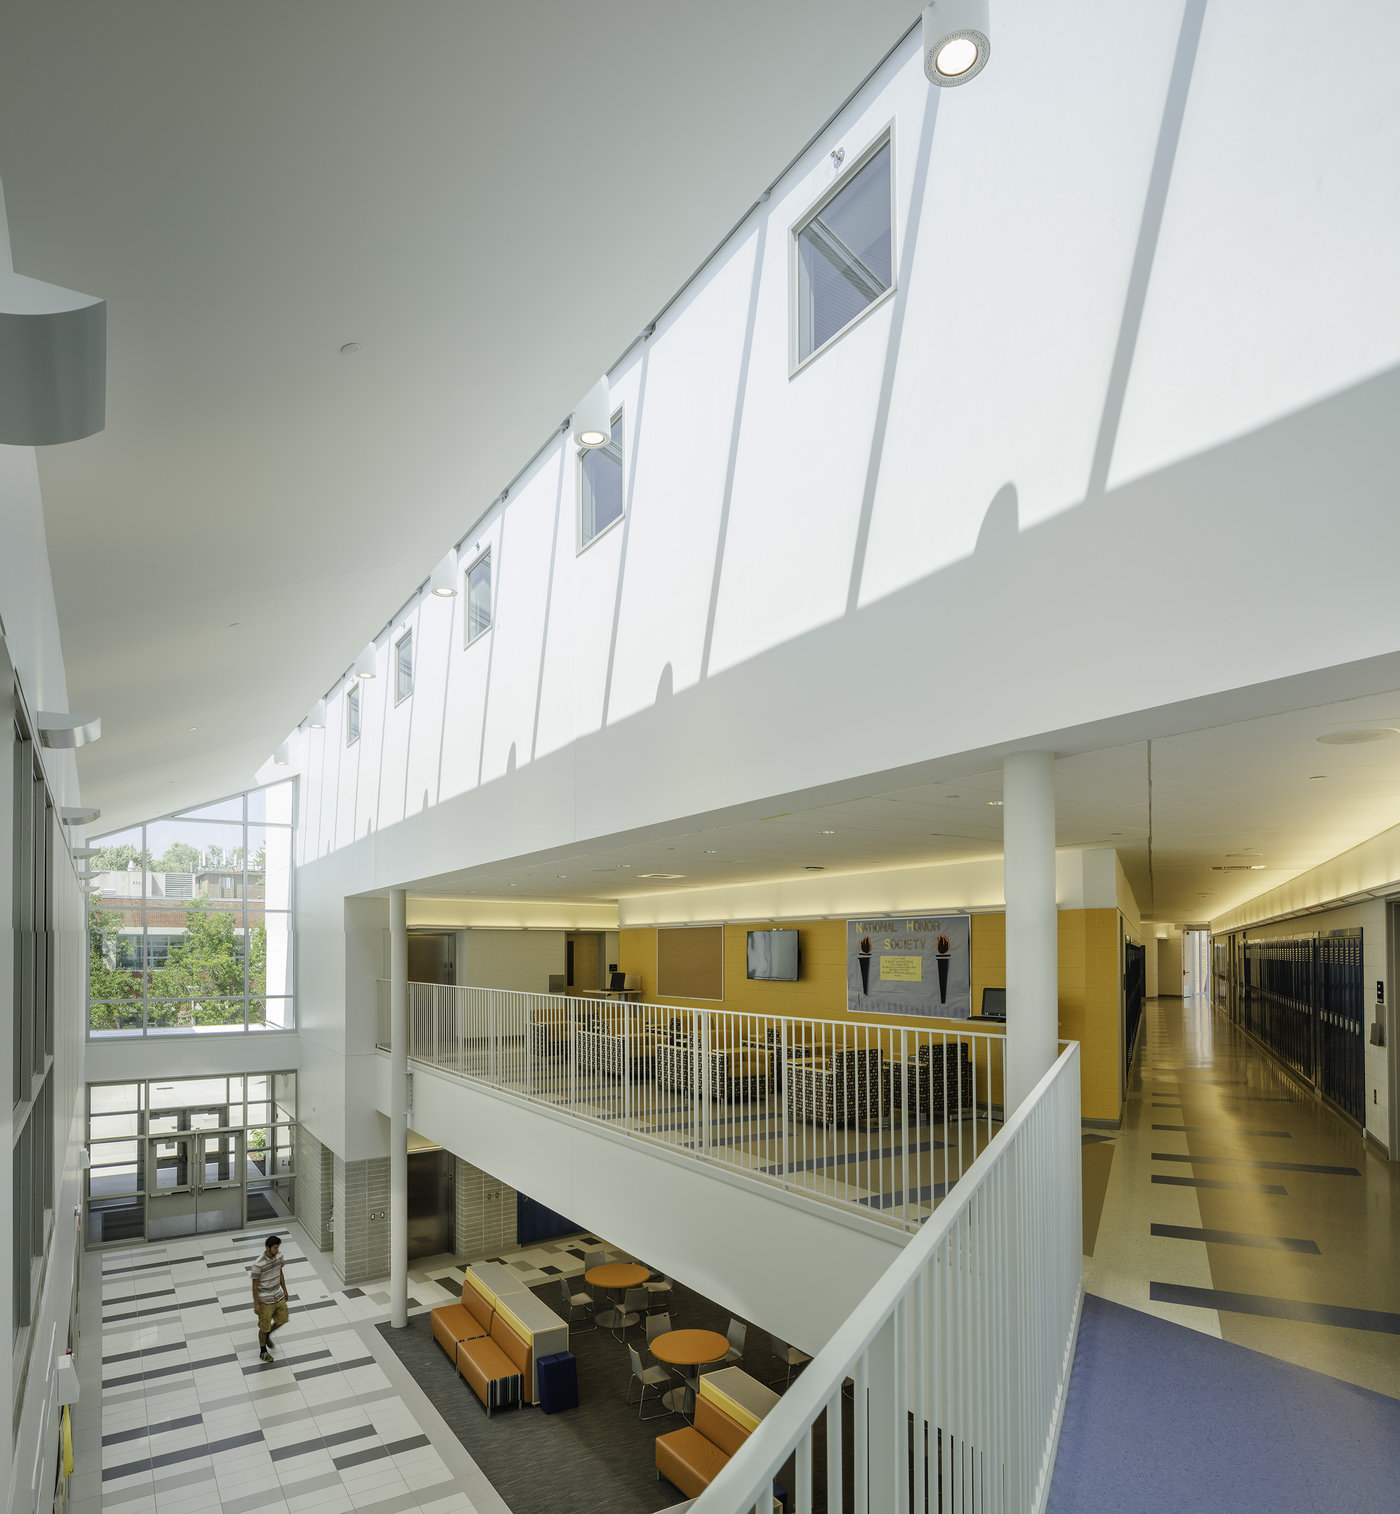 6 tskp hartford magnet trinity college academy interior view entrance halls upper level skylights1 1400 0x0x2775x3000 q85